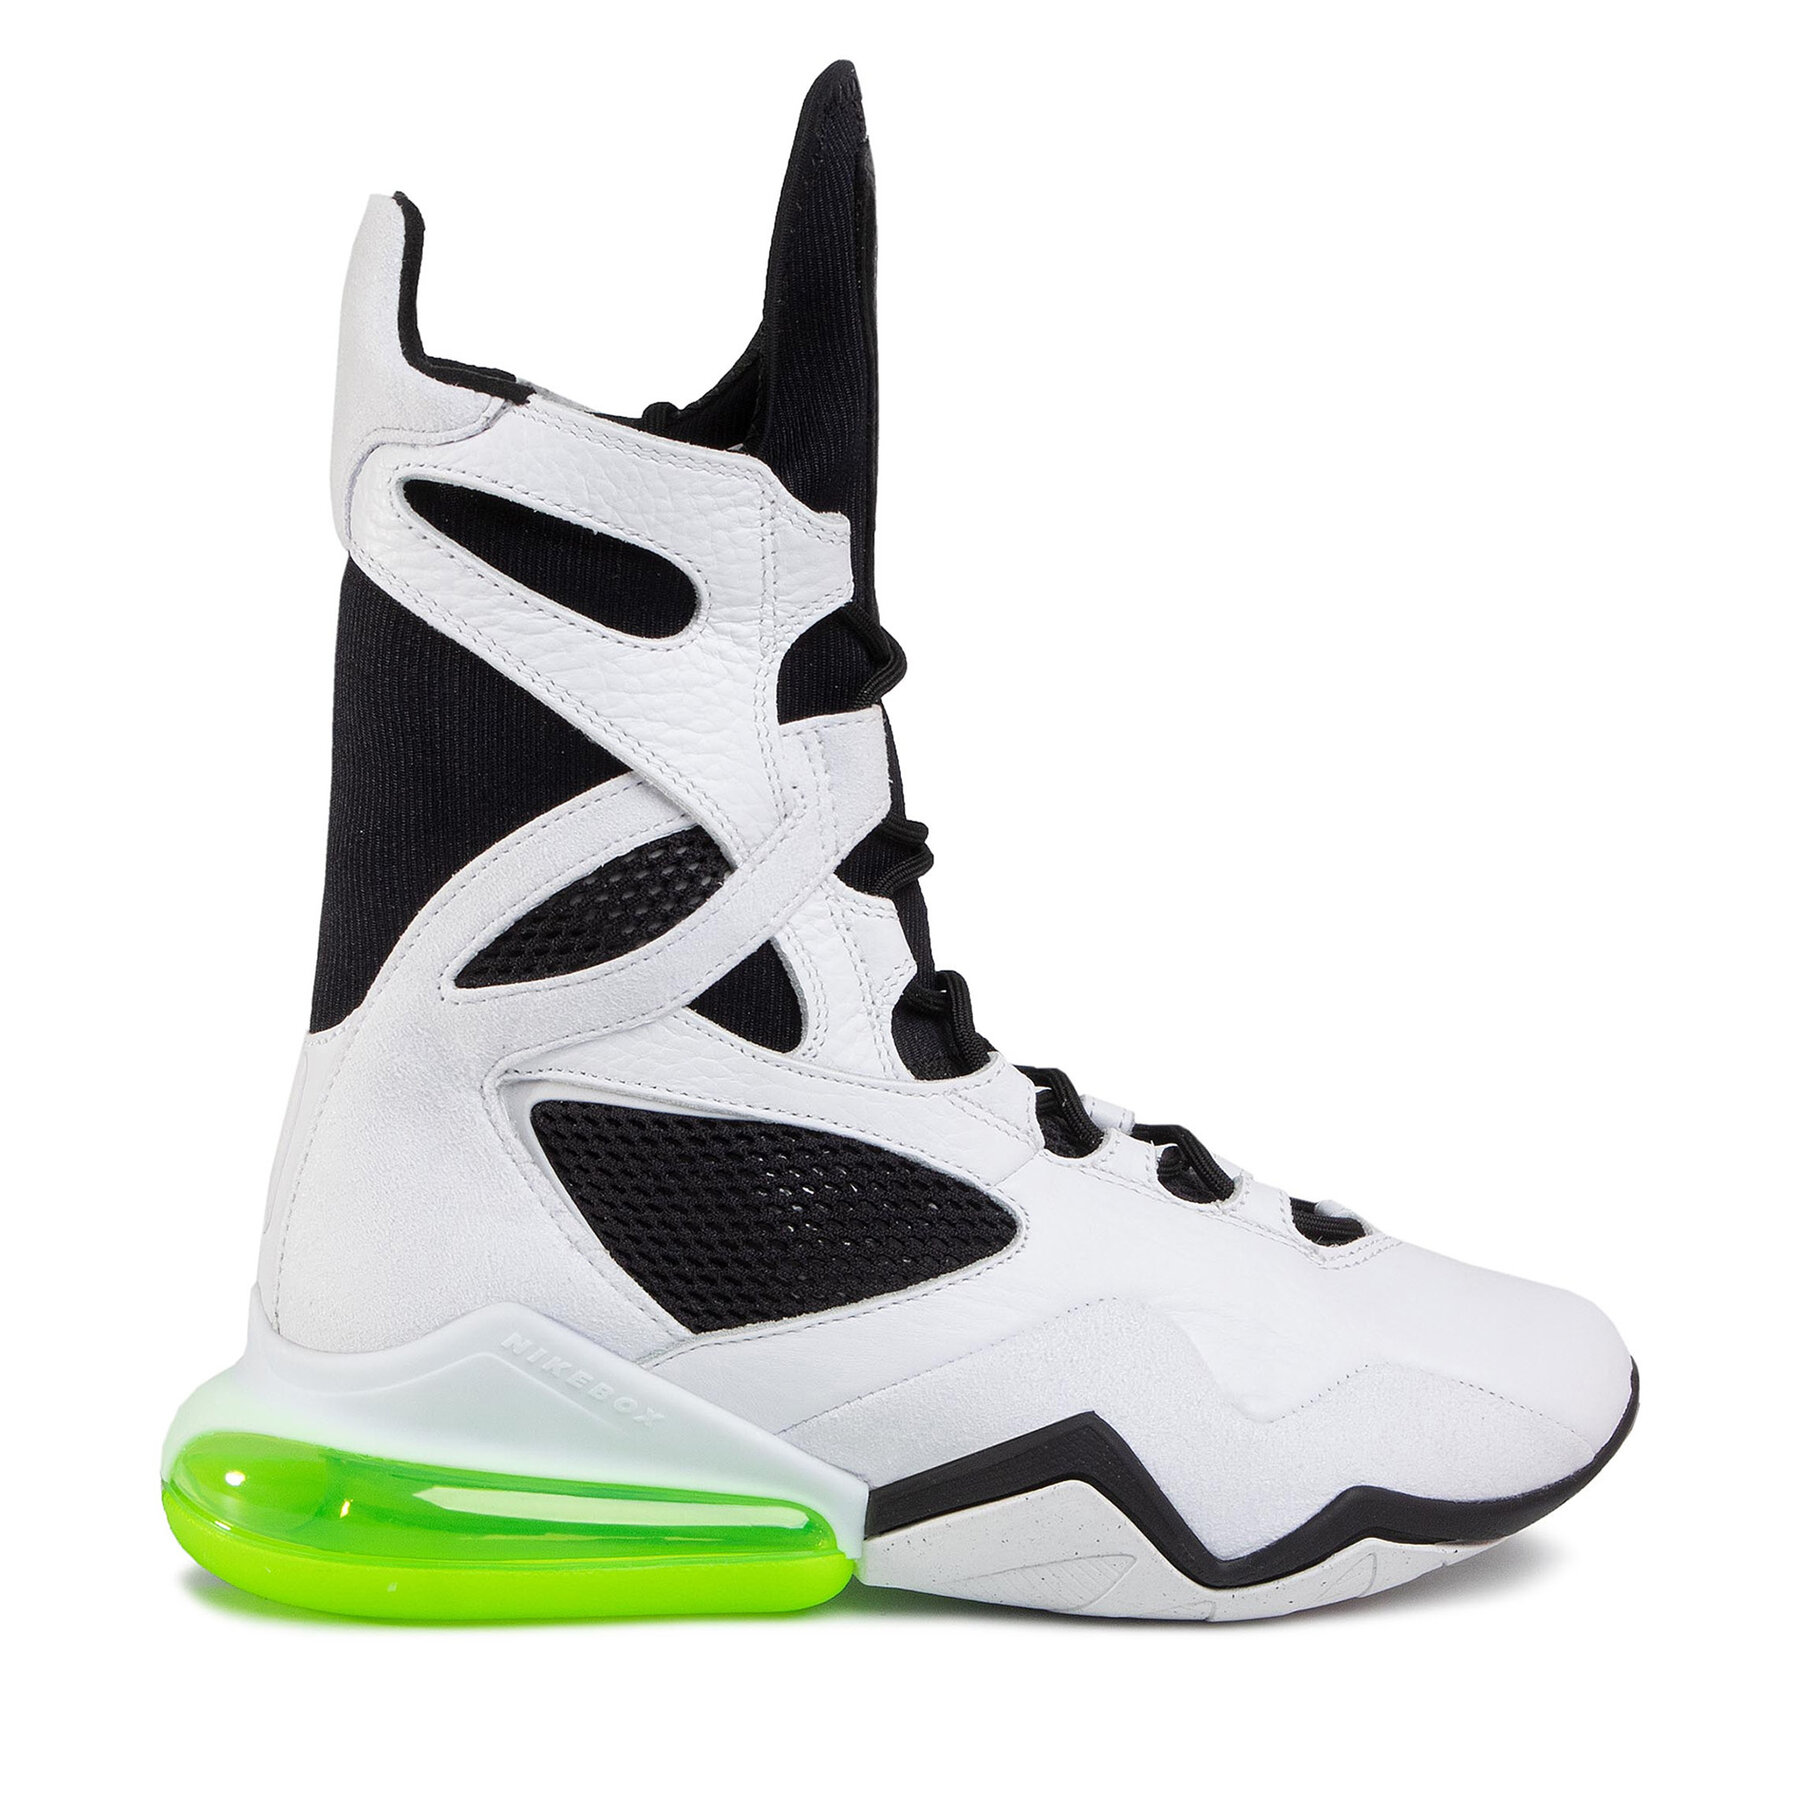 Batai Nike Air Max Box AT9729 103 White/Black/Electric Green